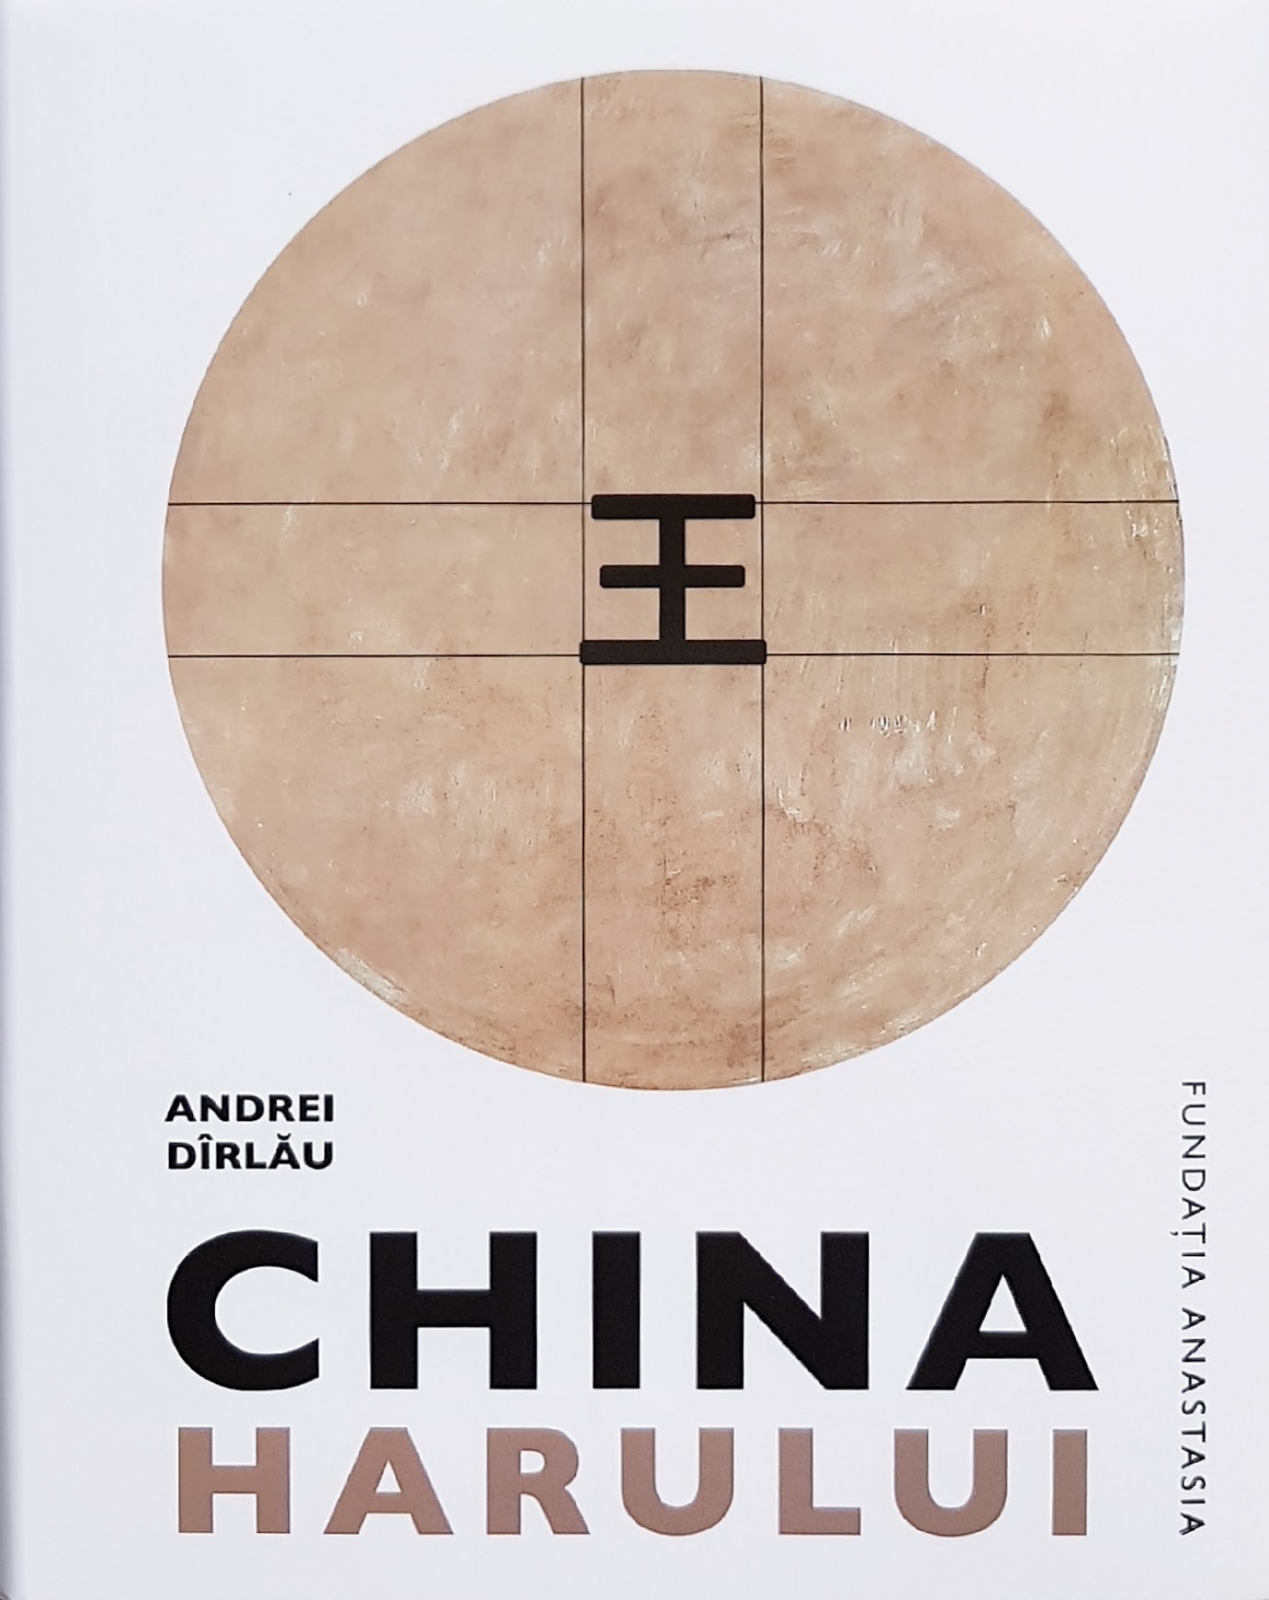 China harului | Andrei Dirlau carturesti.ro poza bestsellers.ro